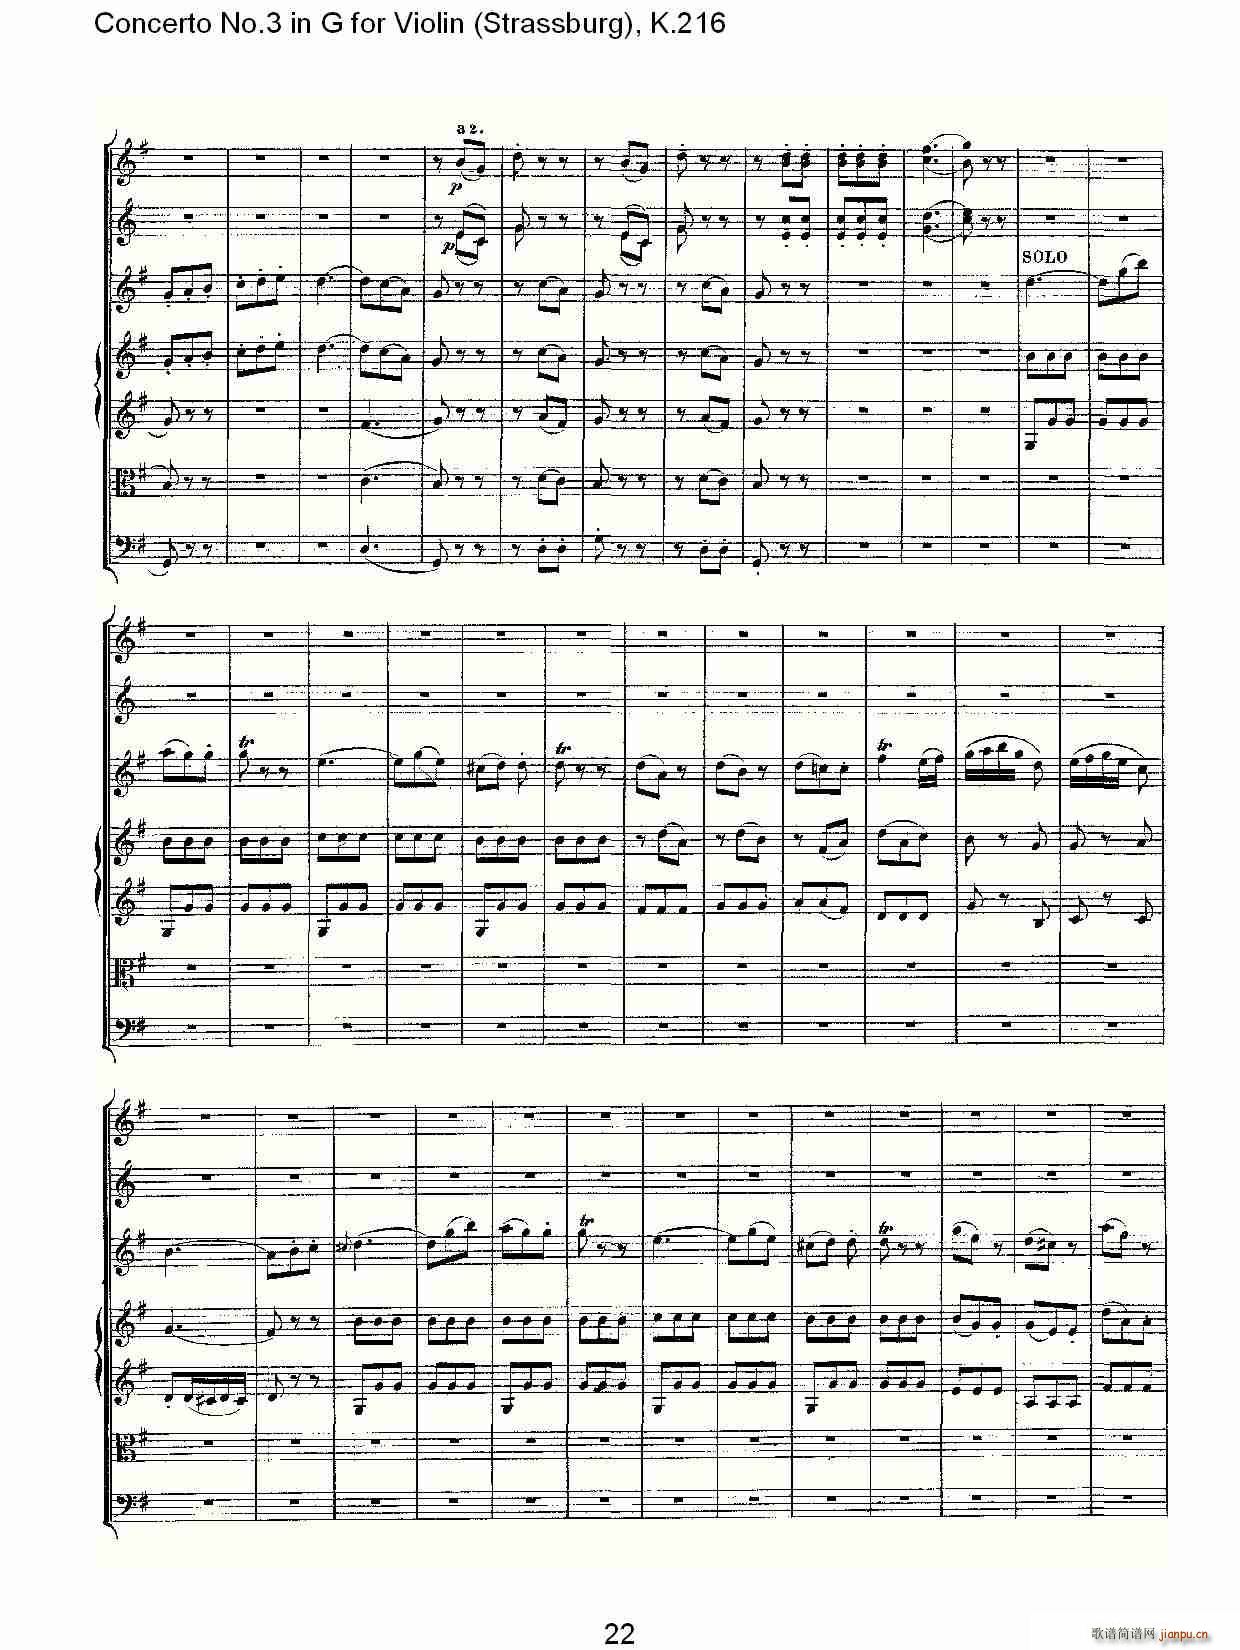 Concerto No.3 in G for Violin K.216(С)22